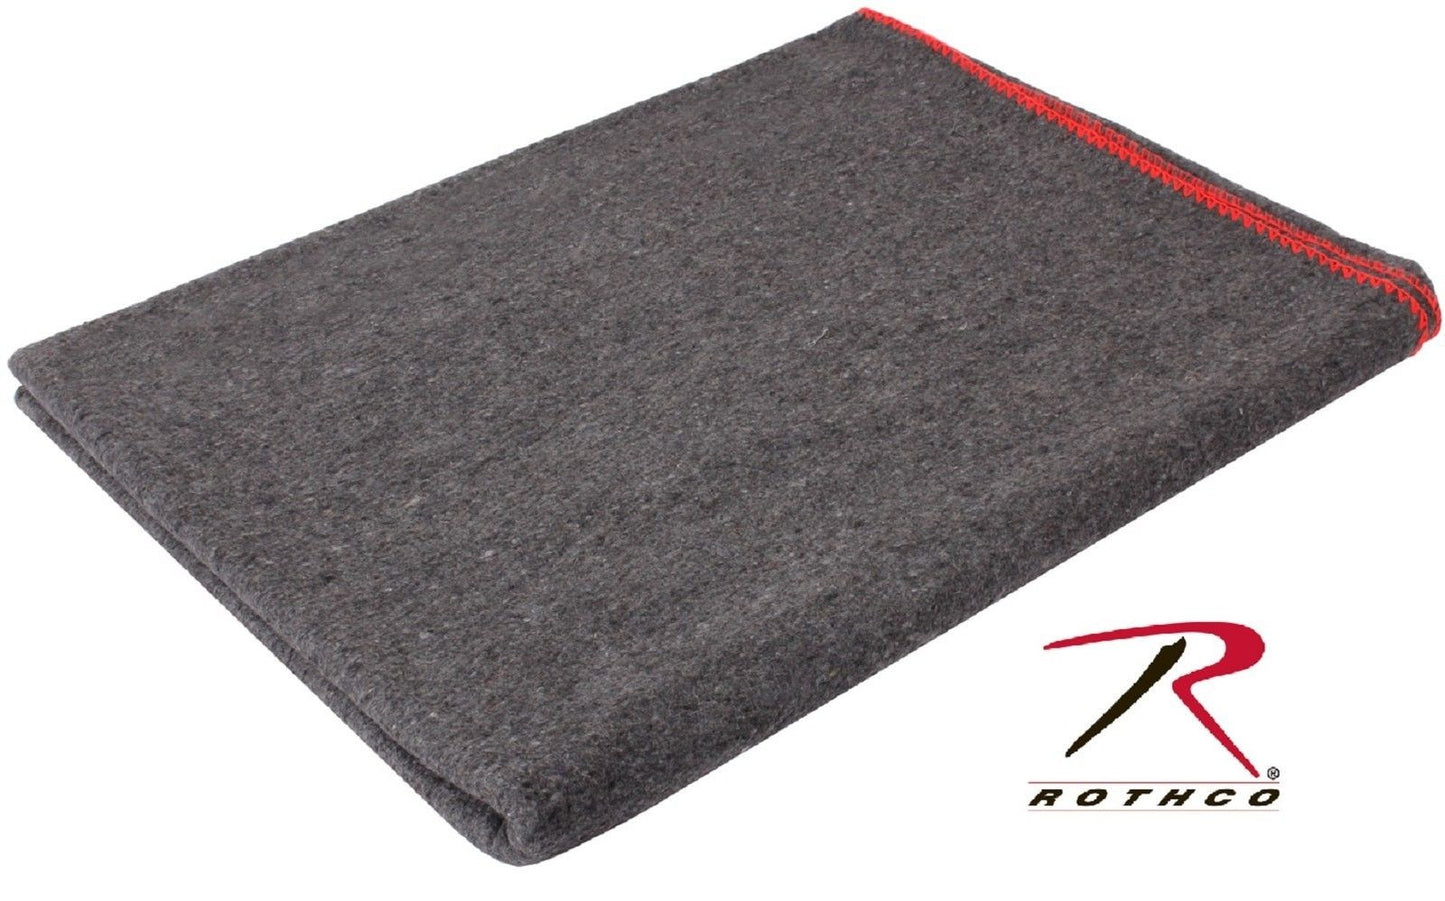 Gray Wool Rescue Survival Blanket - Rothco 90" Fire Retardant Emergency Blankets